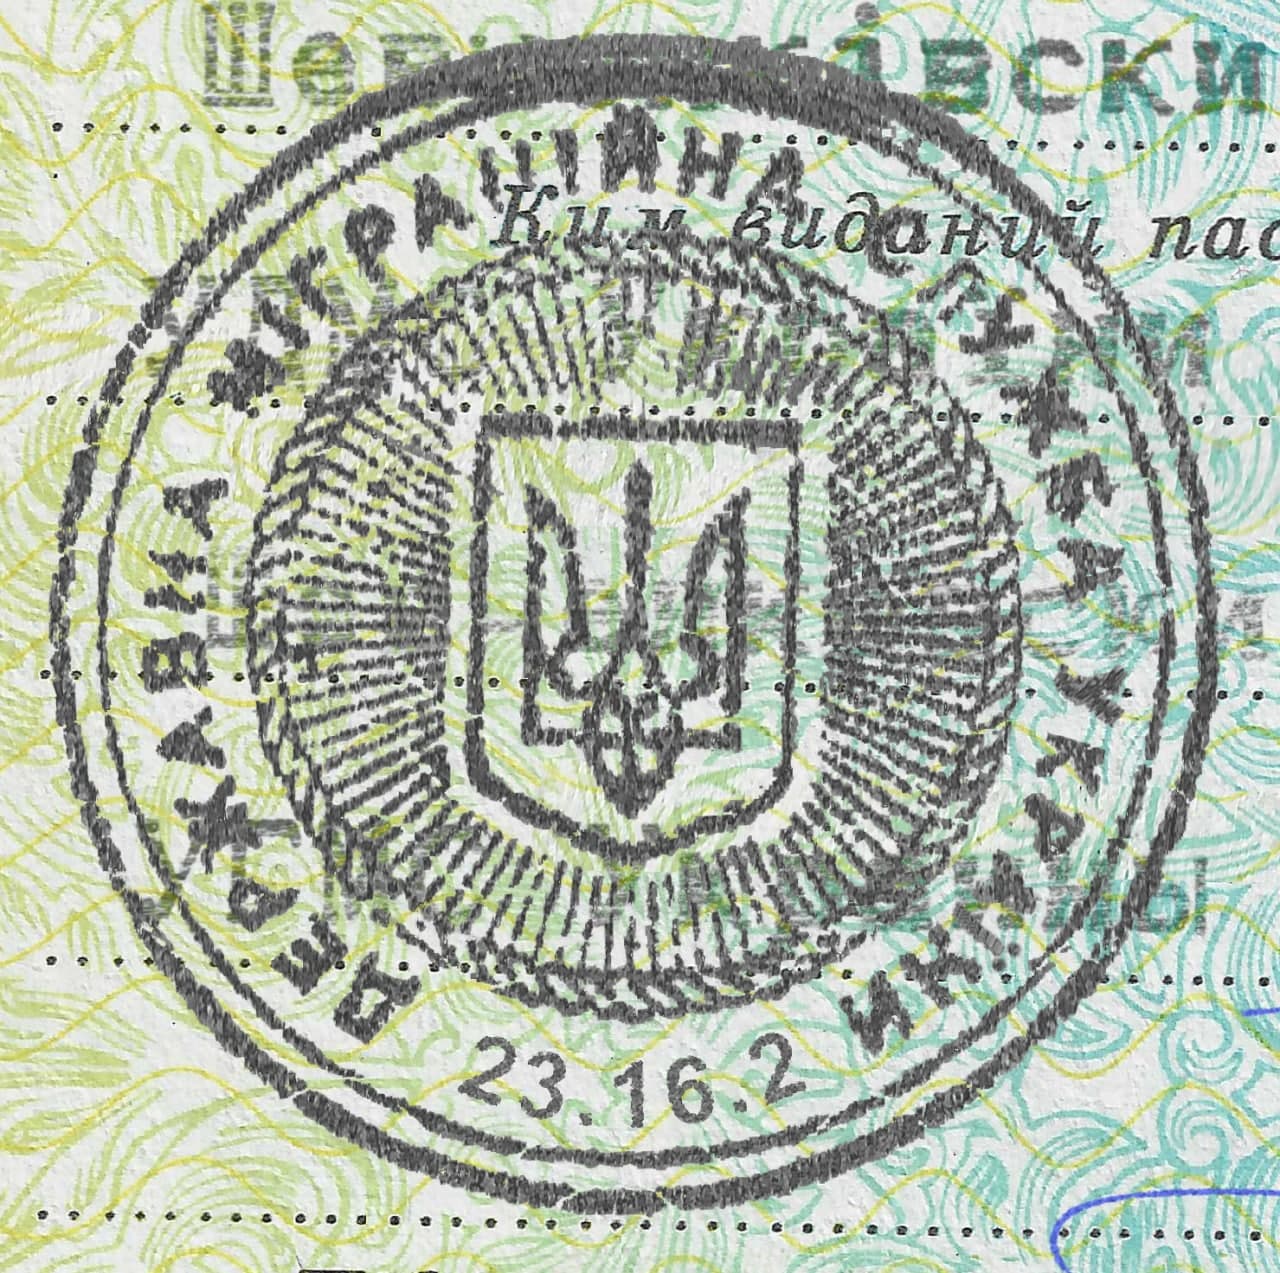 Ukraine Passport-3